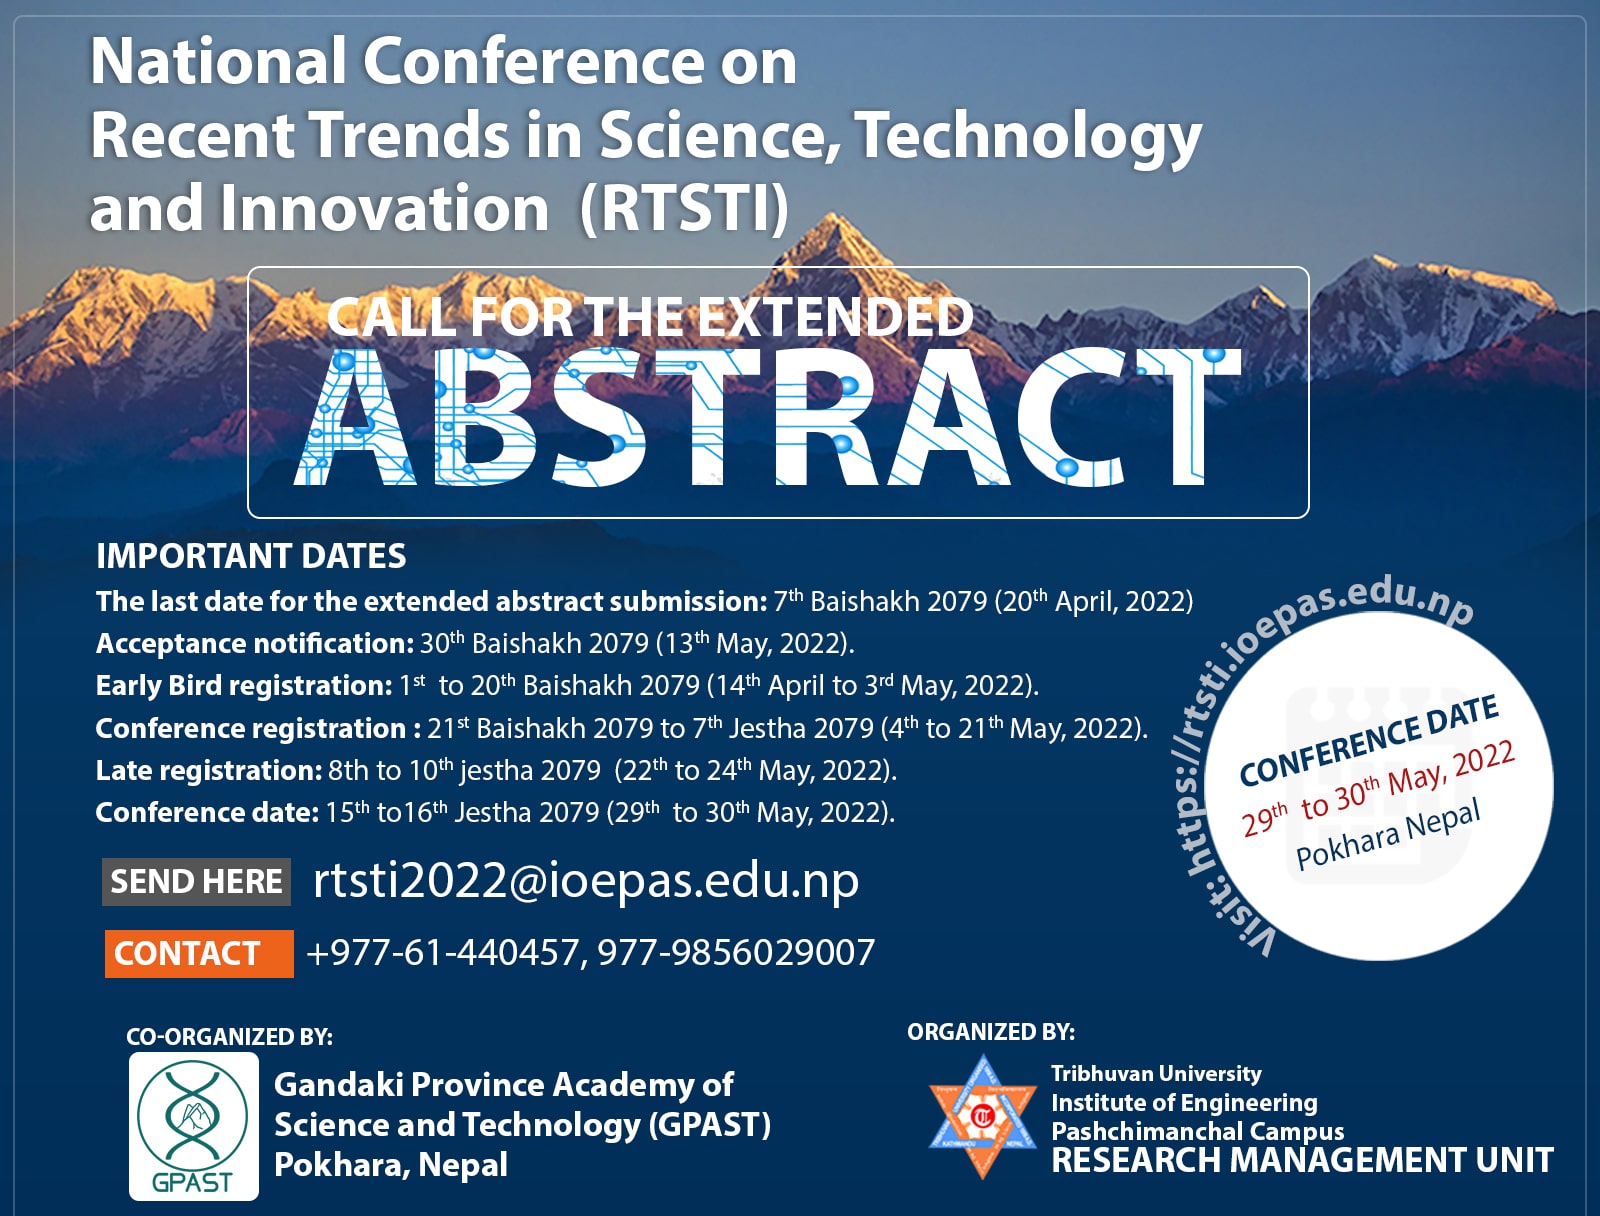 https://rtsti.ioepas.edu.np/wp-content/uploads/2022/03/final-banner_conference-min.jpg